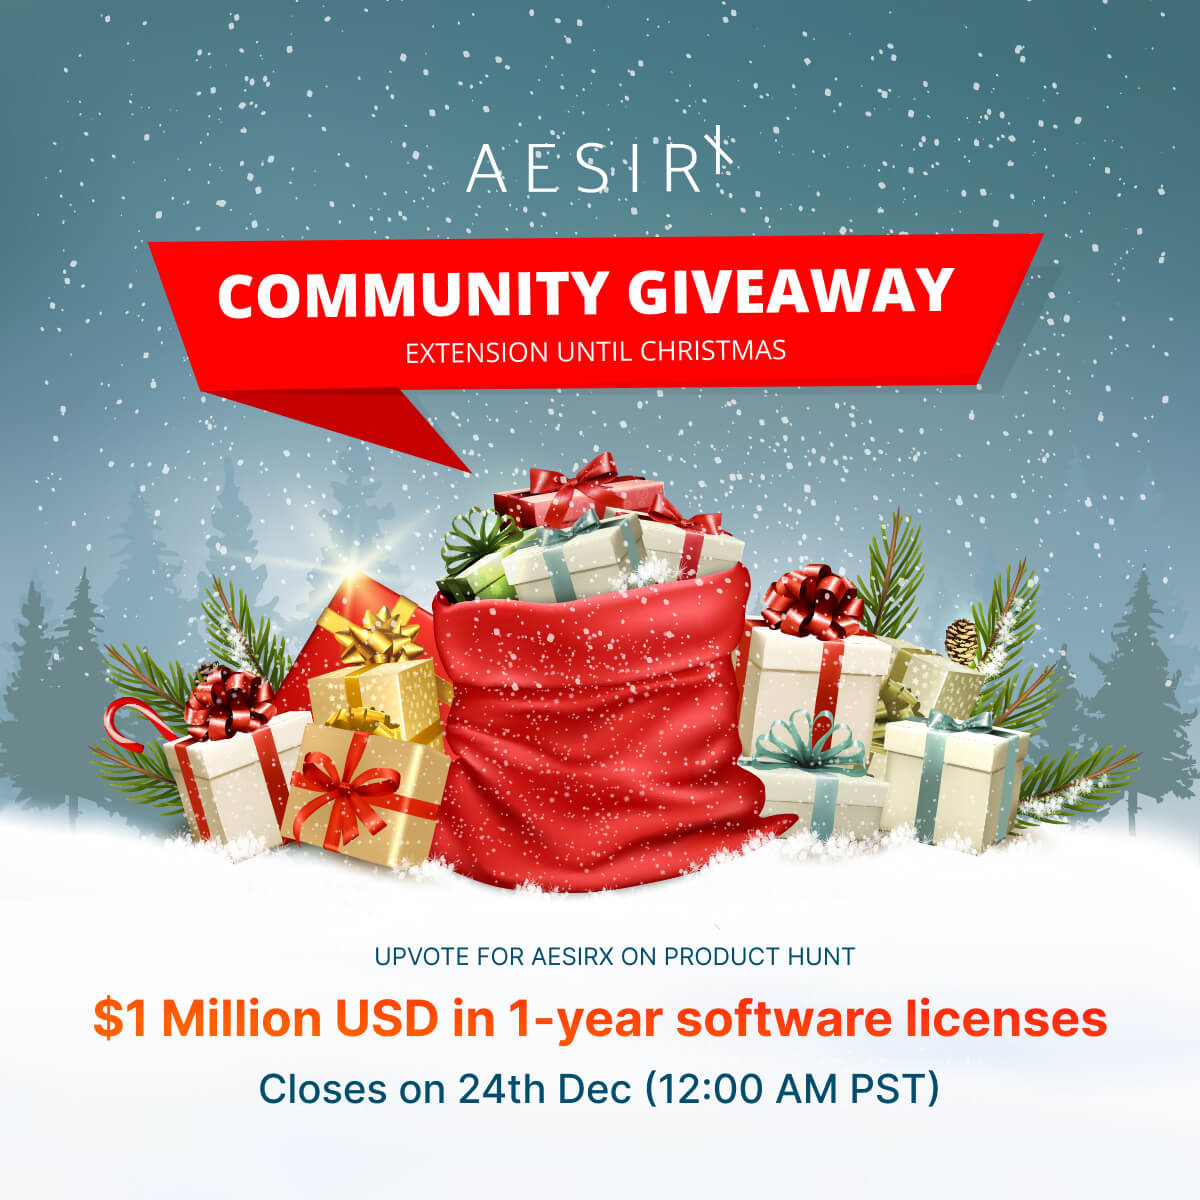 aesirx community giveaway extension until christmas